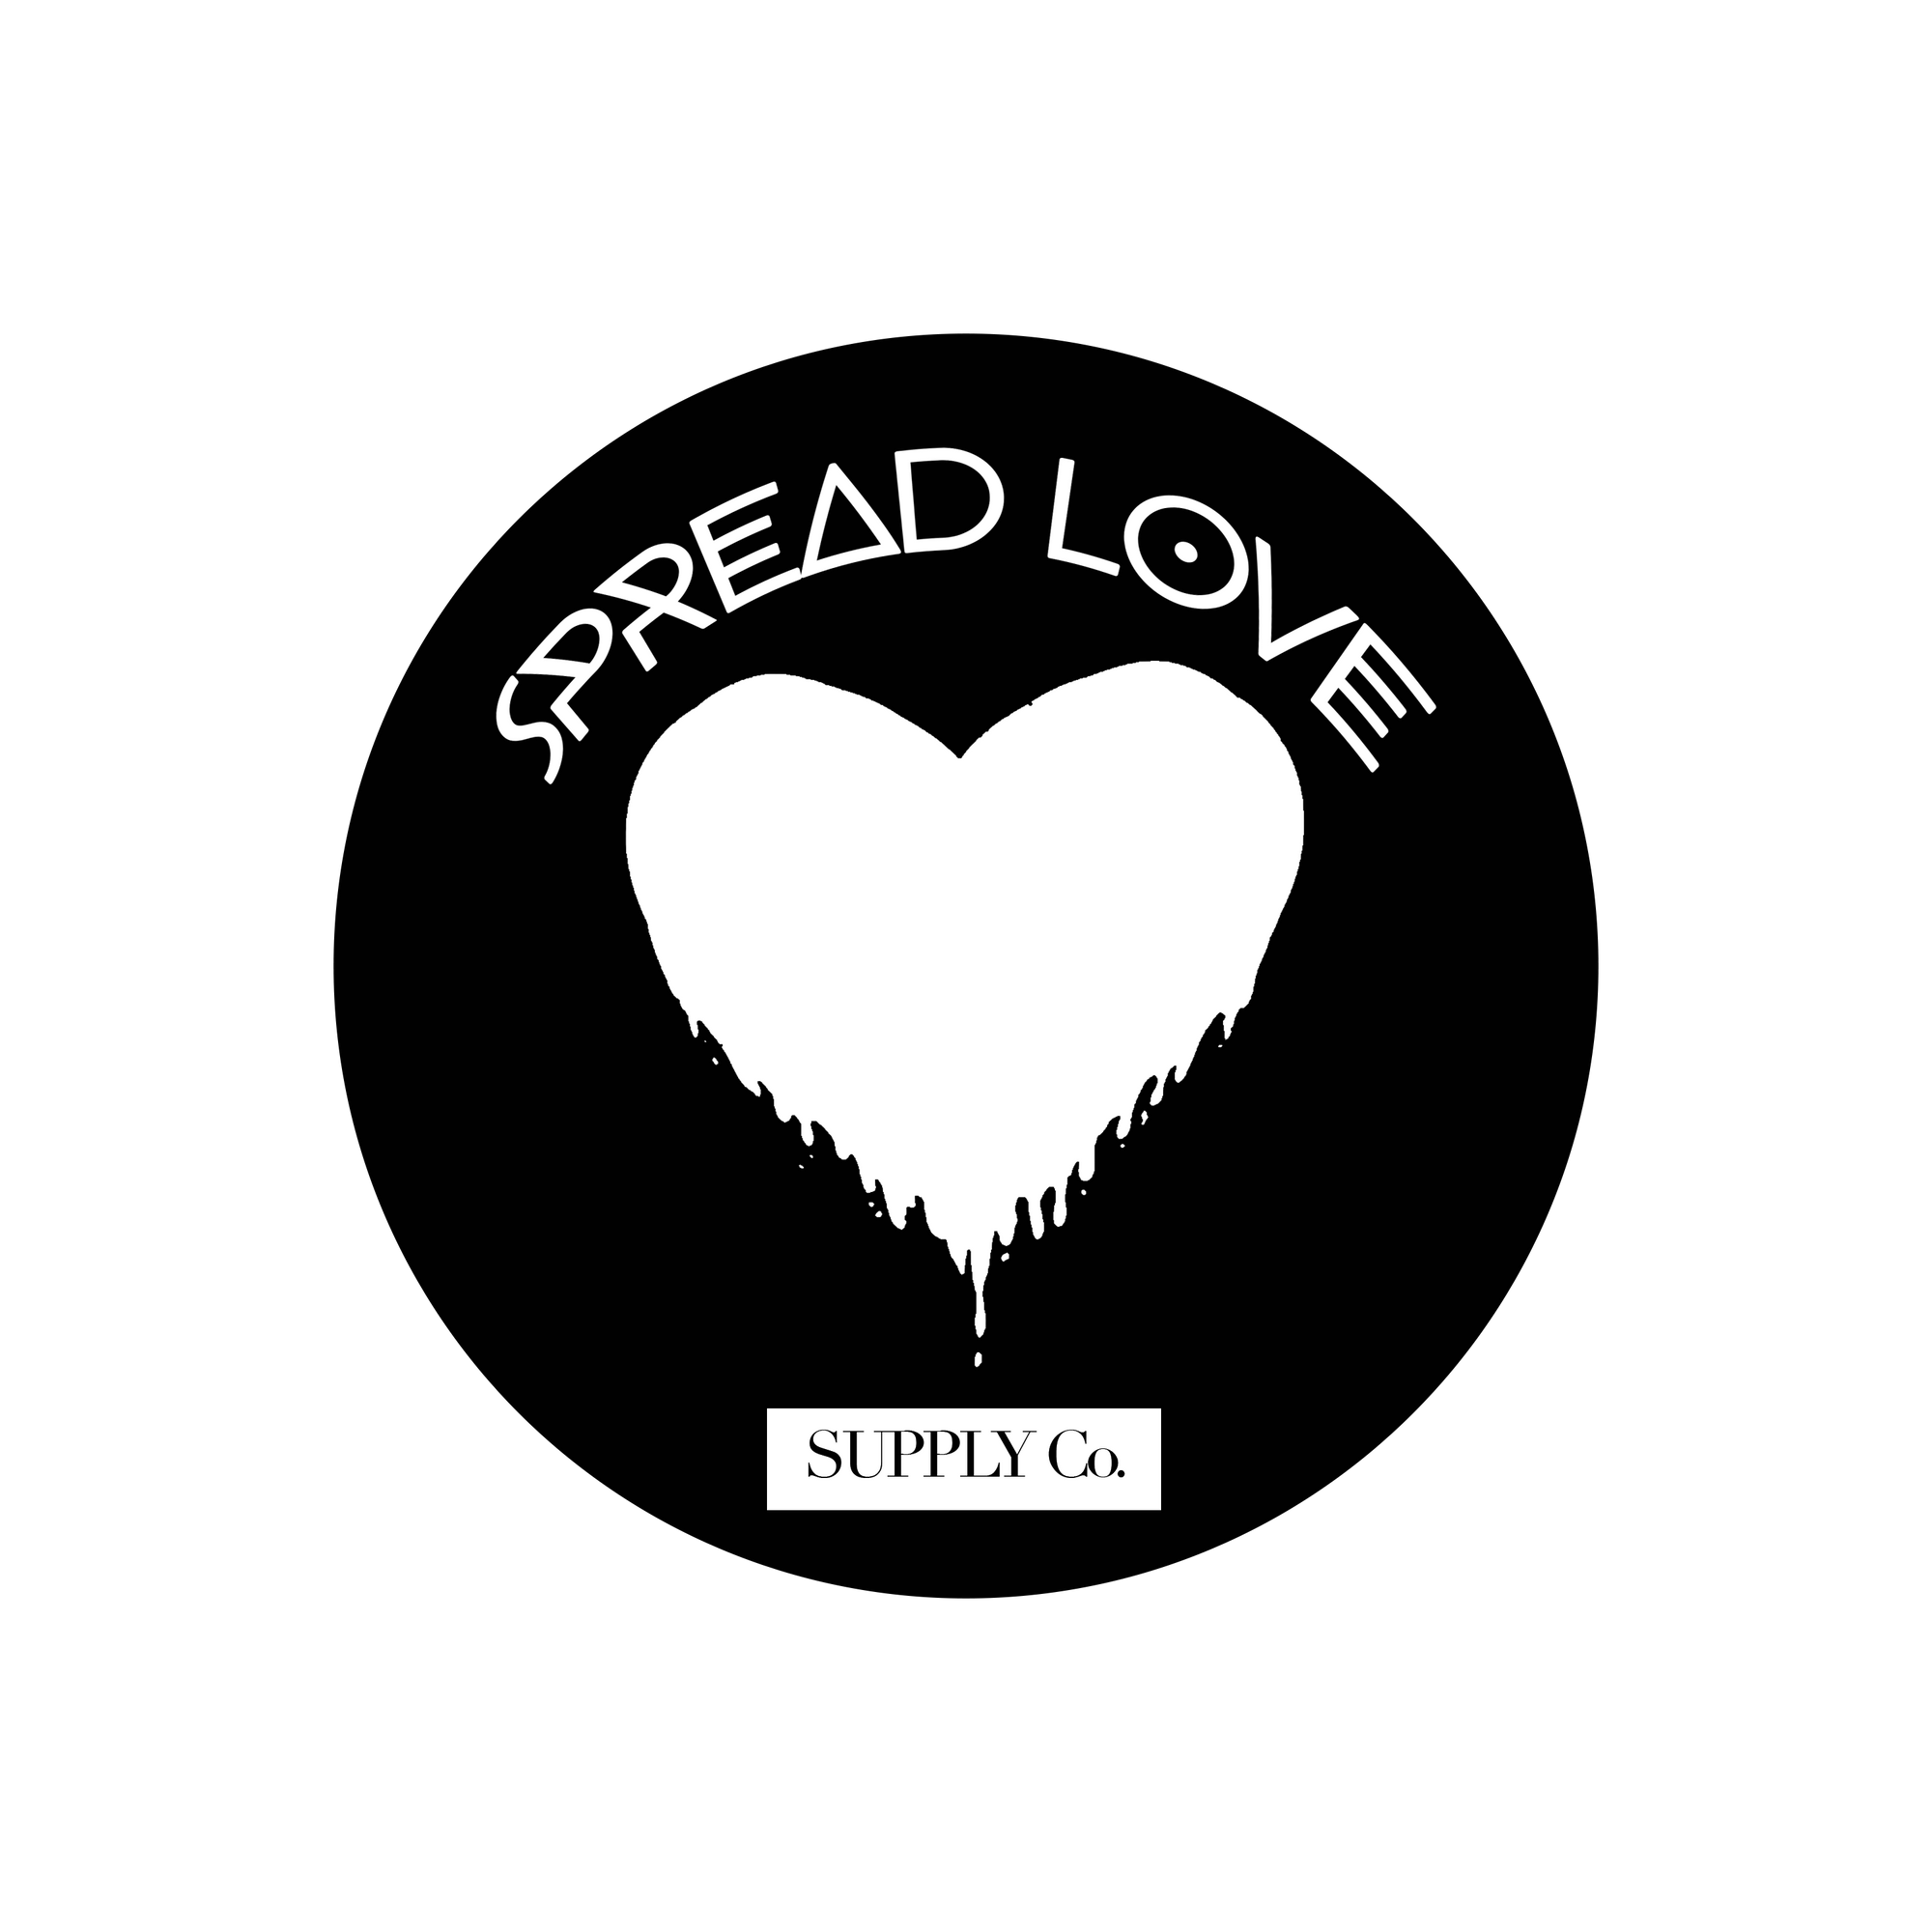 Spread Love Supply Co. Logo Wall Sticker Graphic (2' x 2')